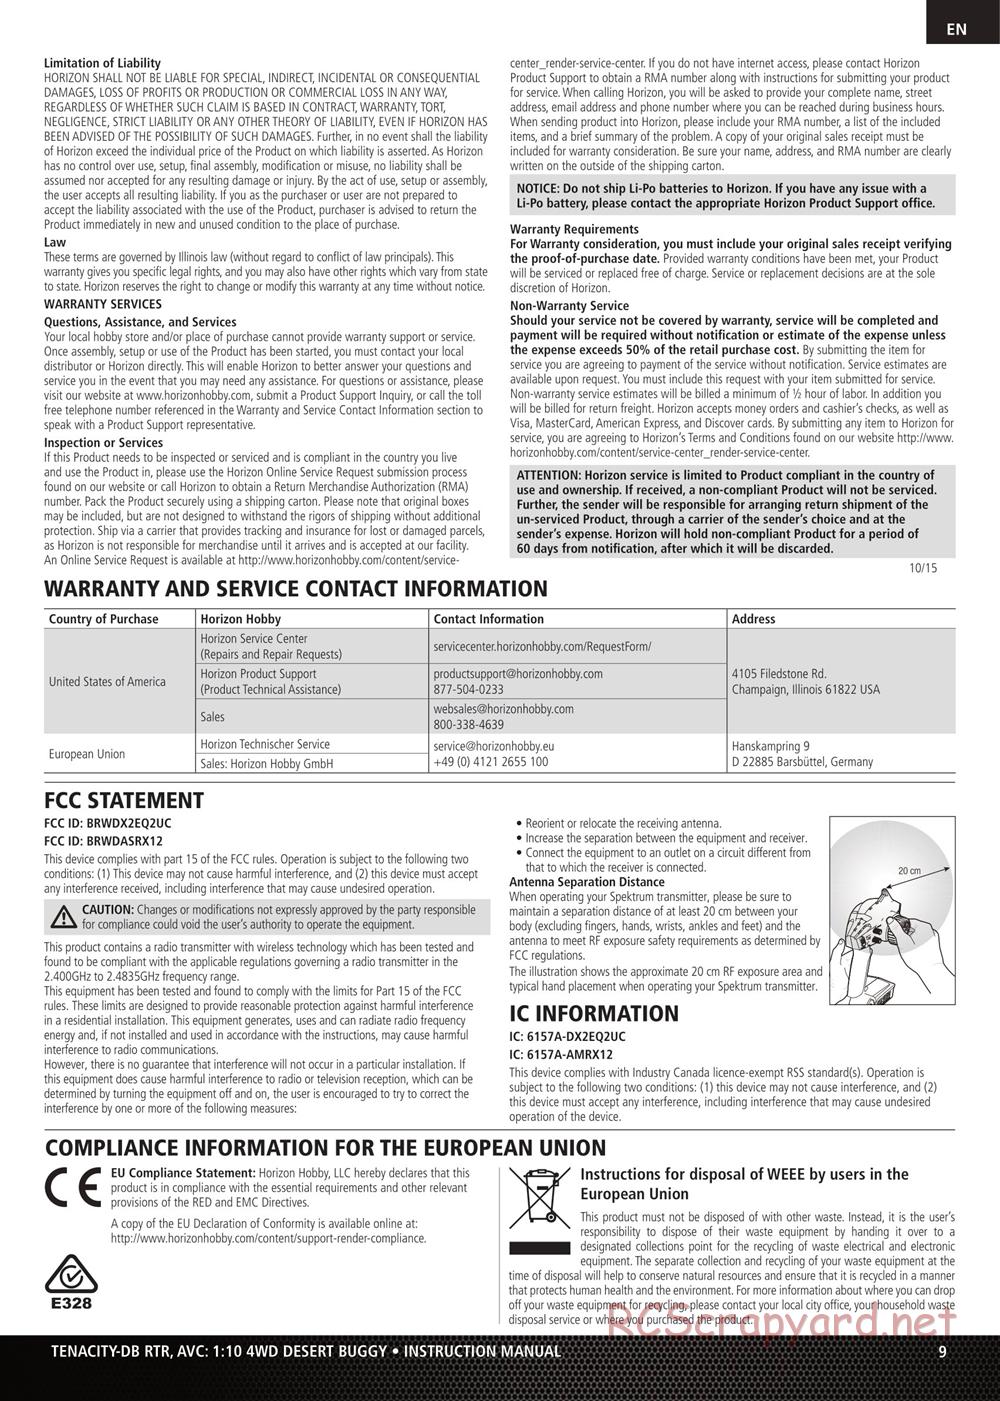 Team Losi - Tenacity-DB Pro - Manual - Page 9